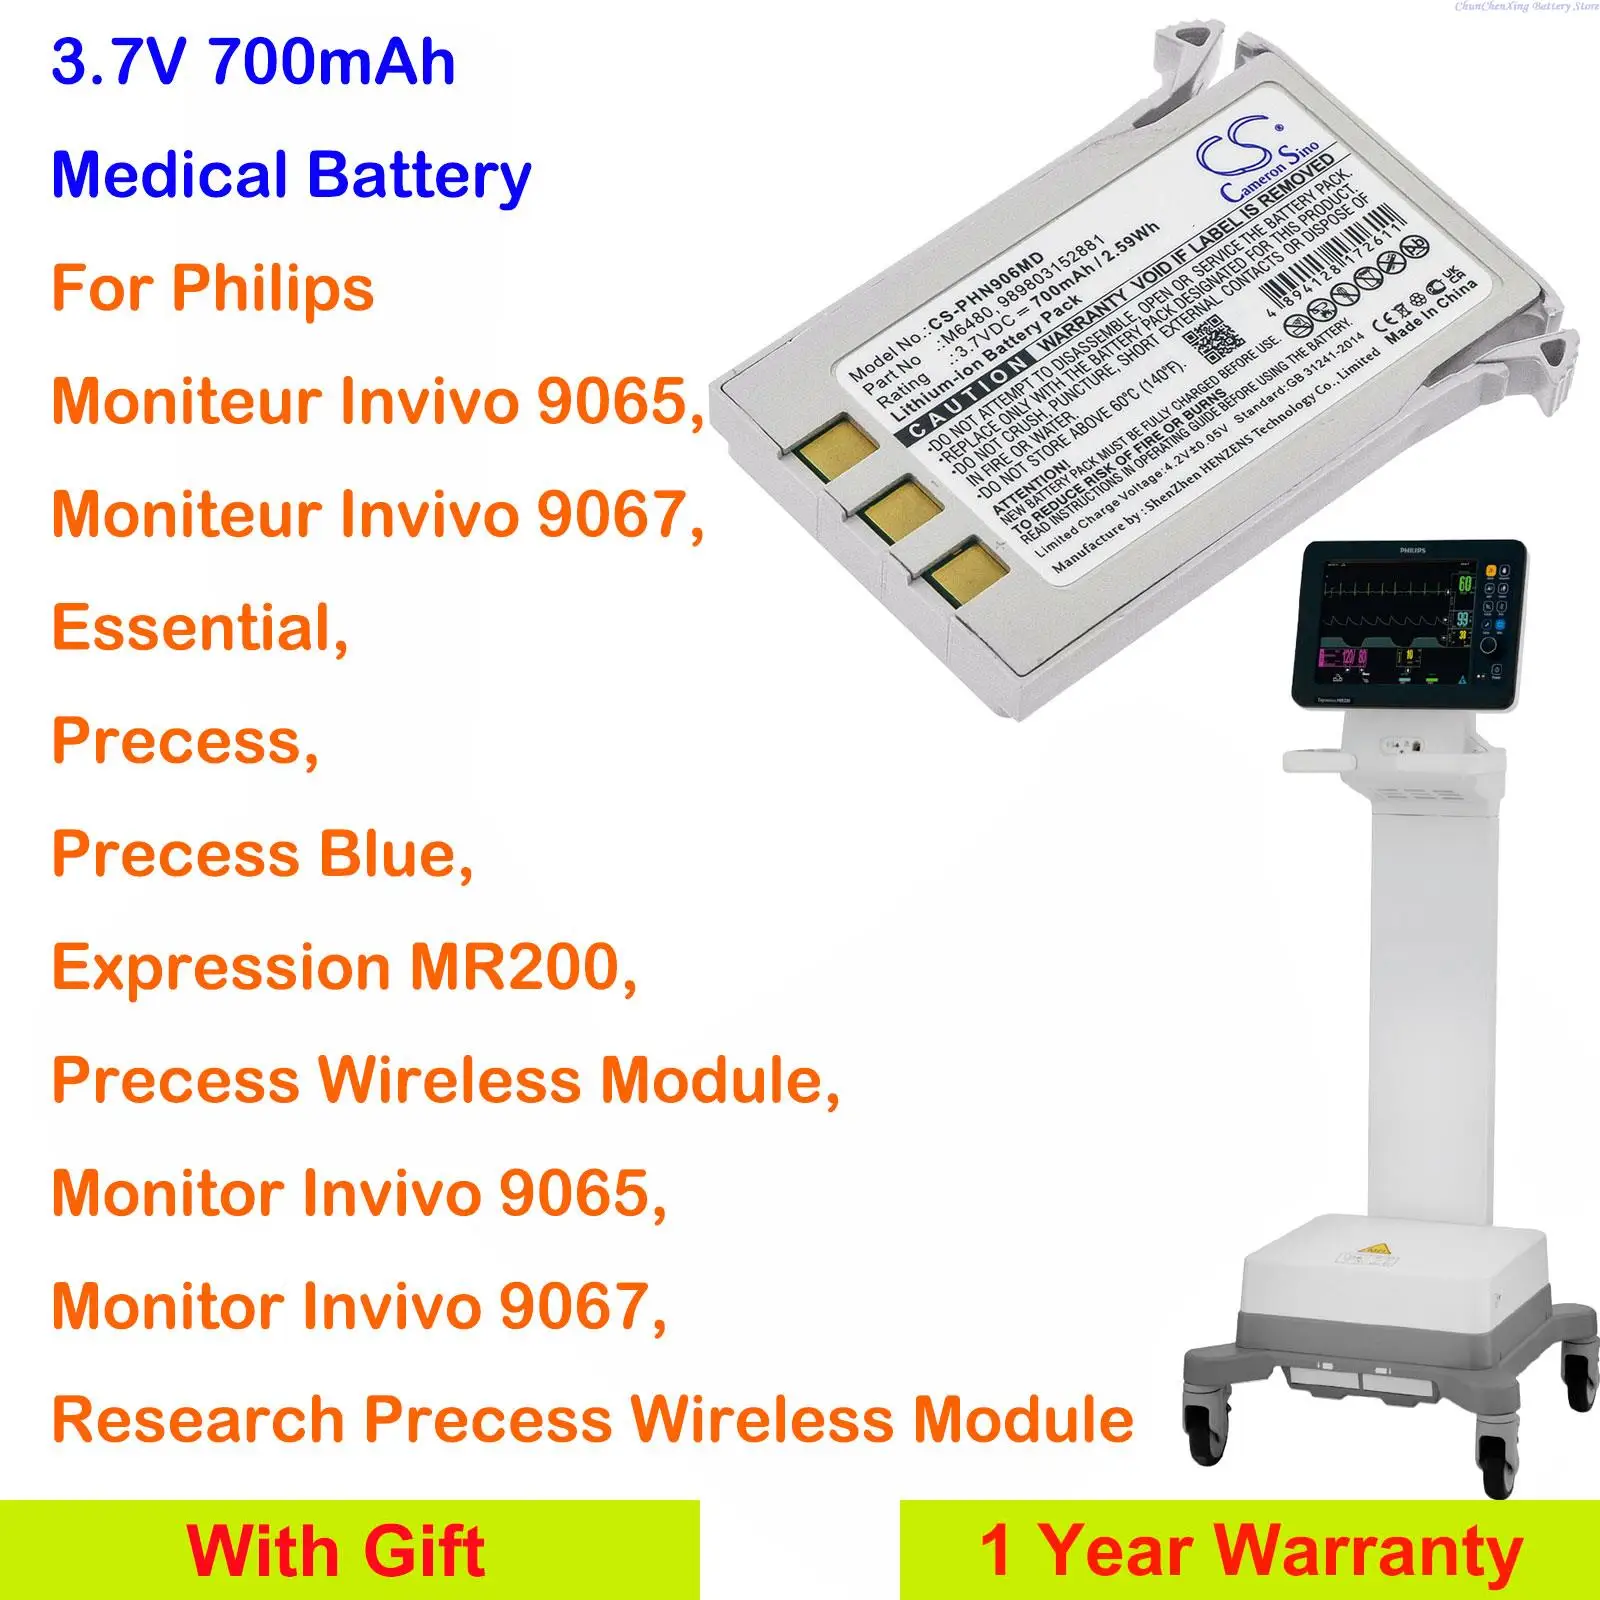 

Cameron Sino 700mAh Medical Battery M6480 for Philips Moniteur Invivo 9065 9067 Essential Precess Blue Expression MR200 +Gift